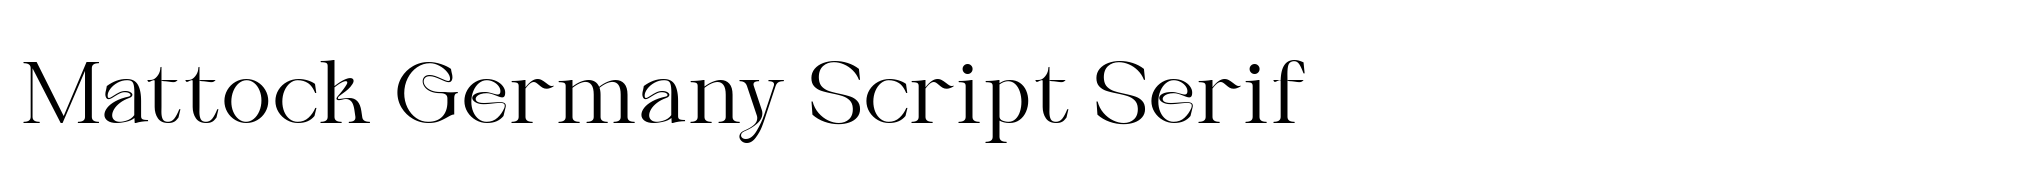 Mattock Germany Script Serif image